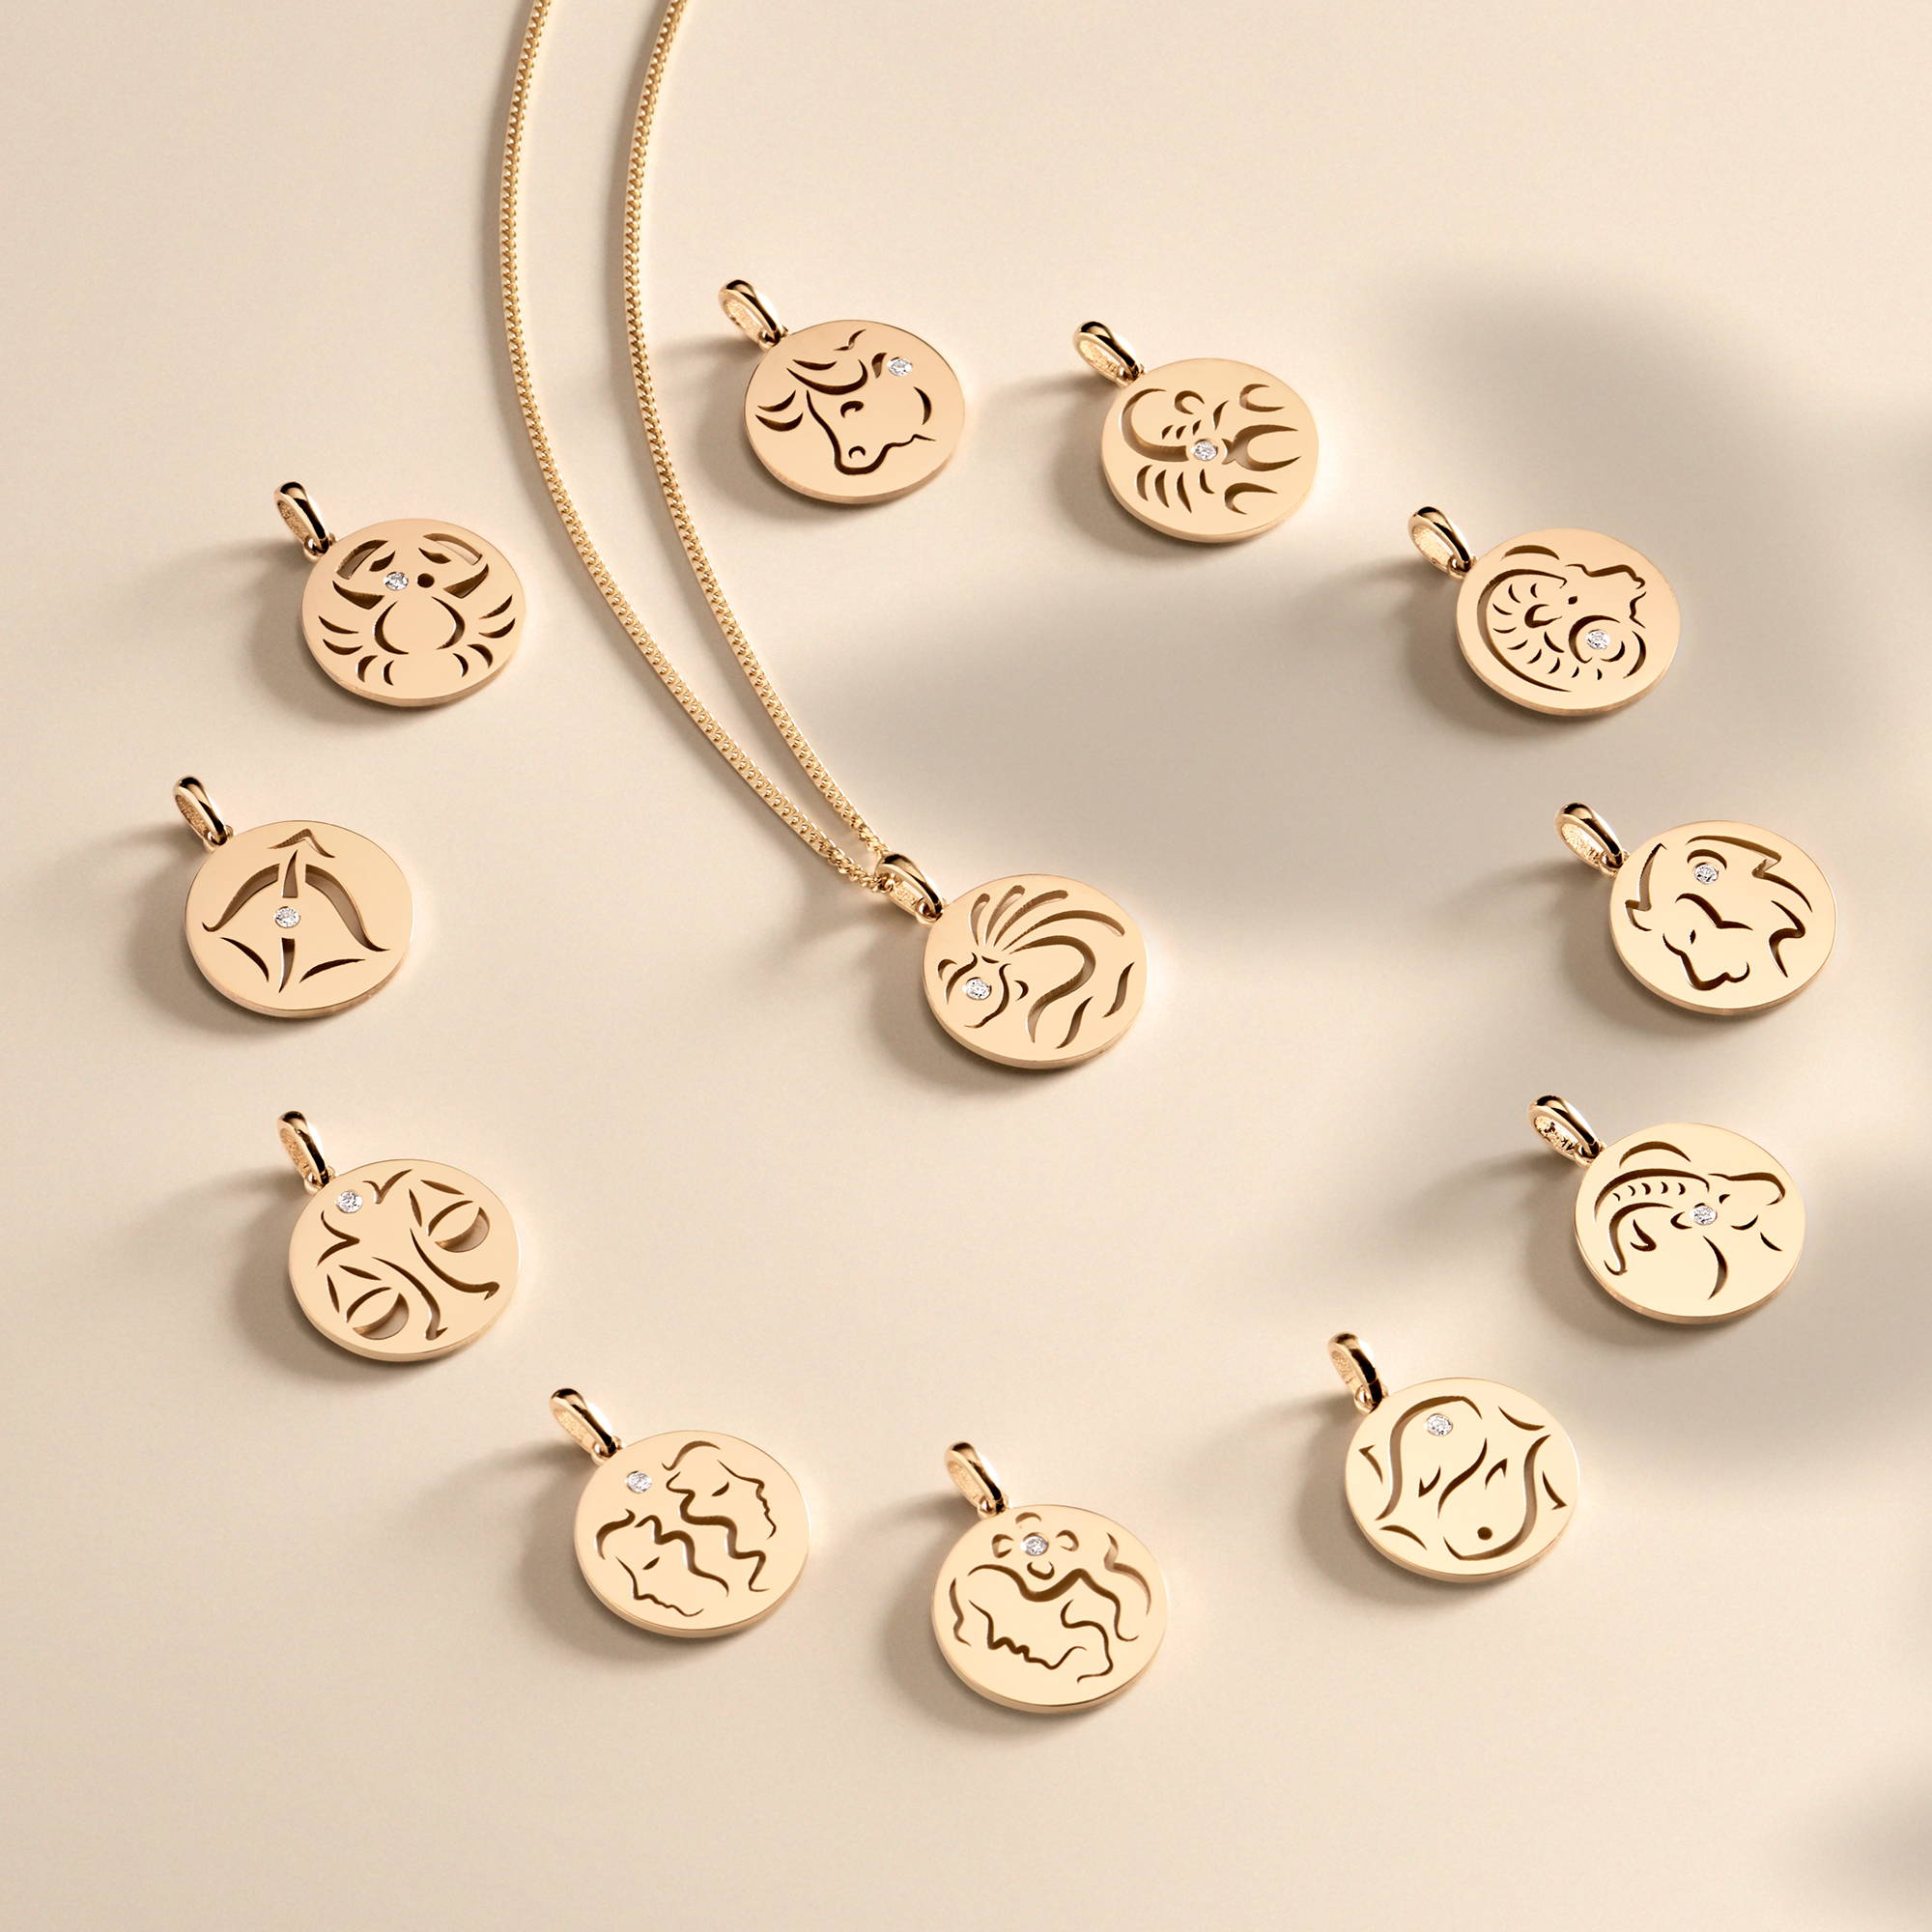 Modaya zodiacs pendants collection